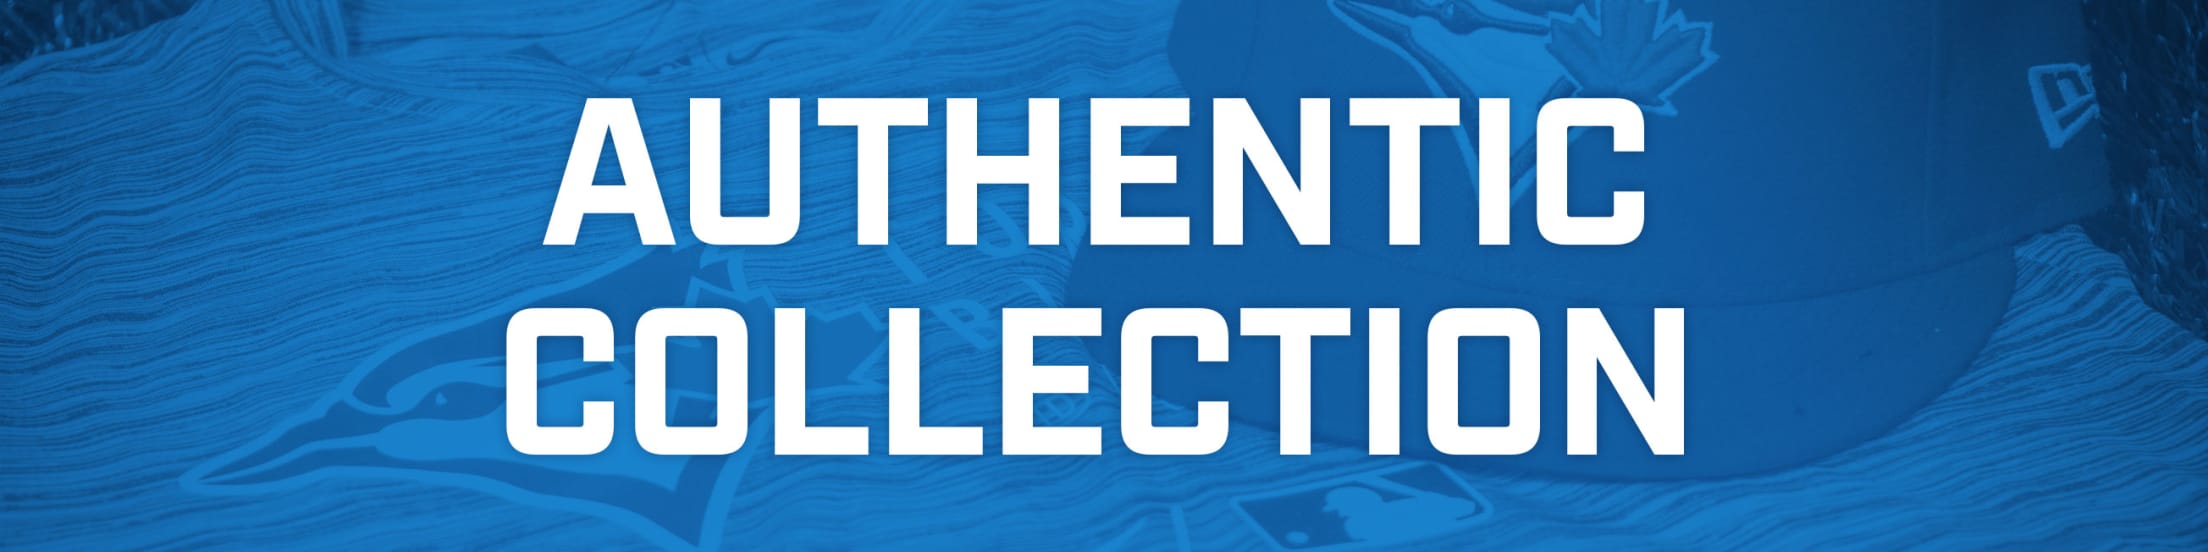 Team Store Authentics Collection